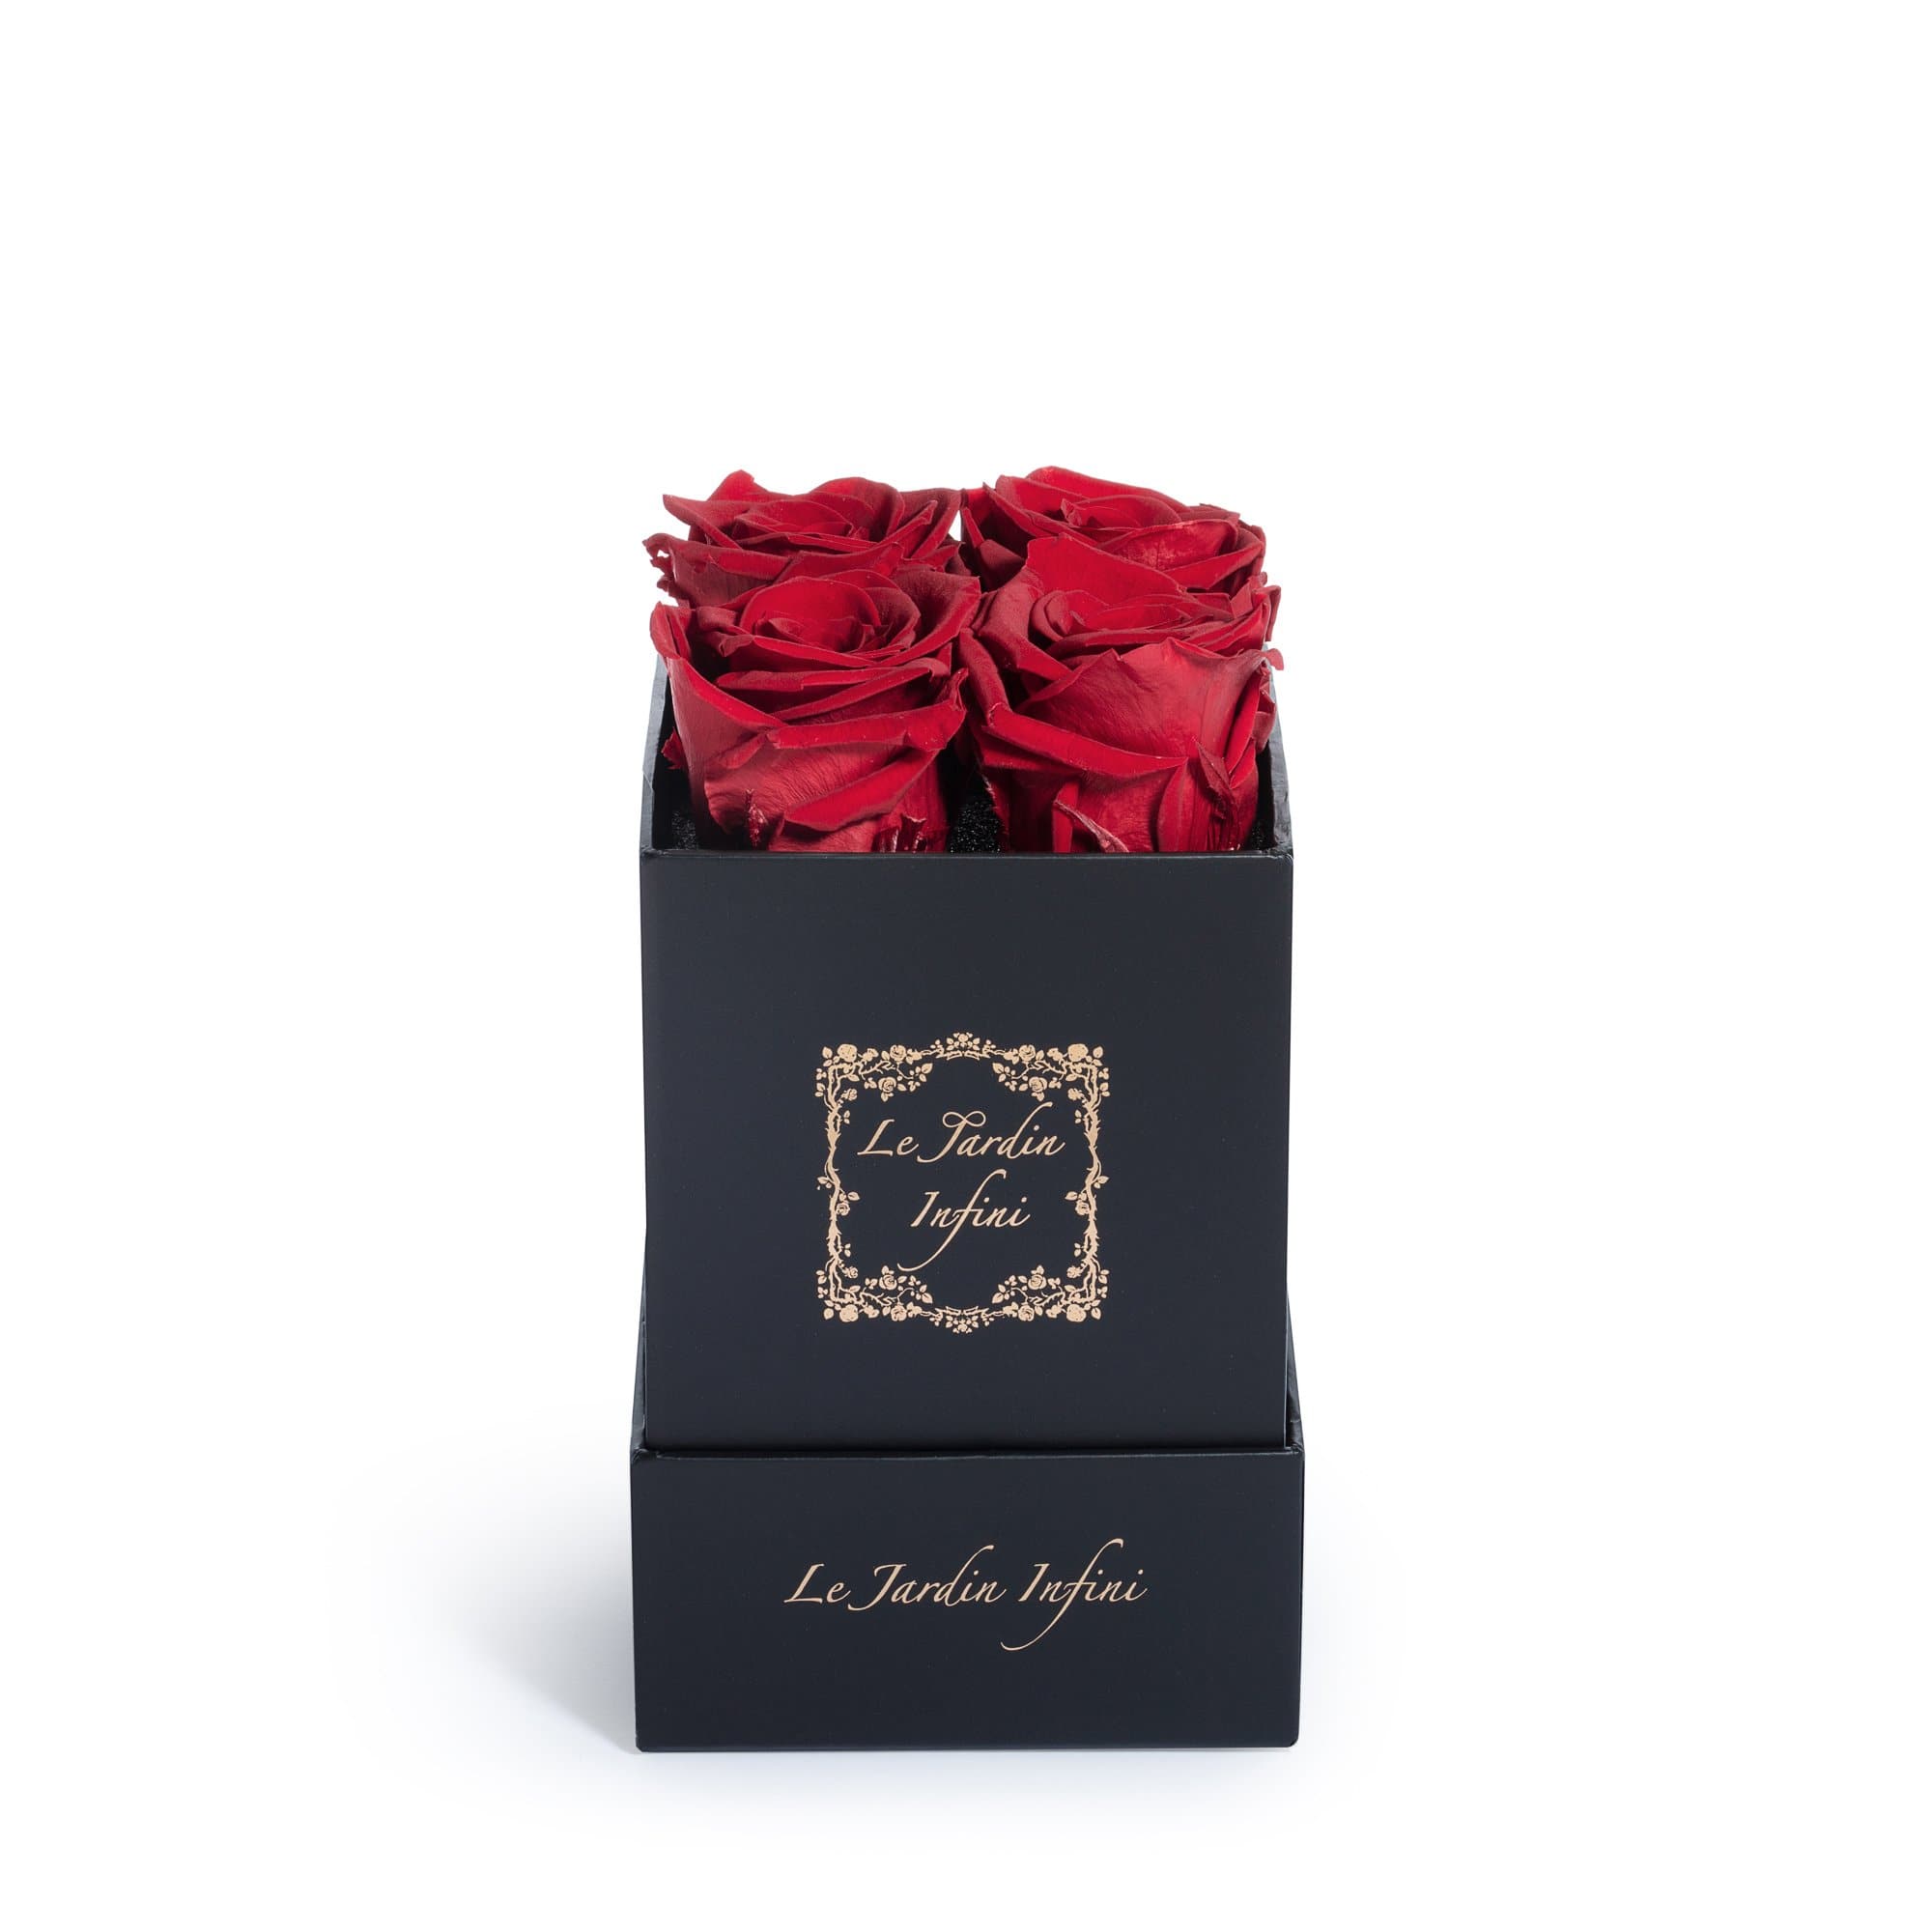 Burgundy Preserved Roses - Small Square Black Box